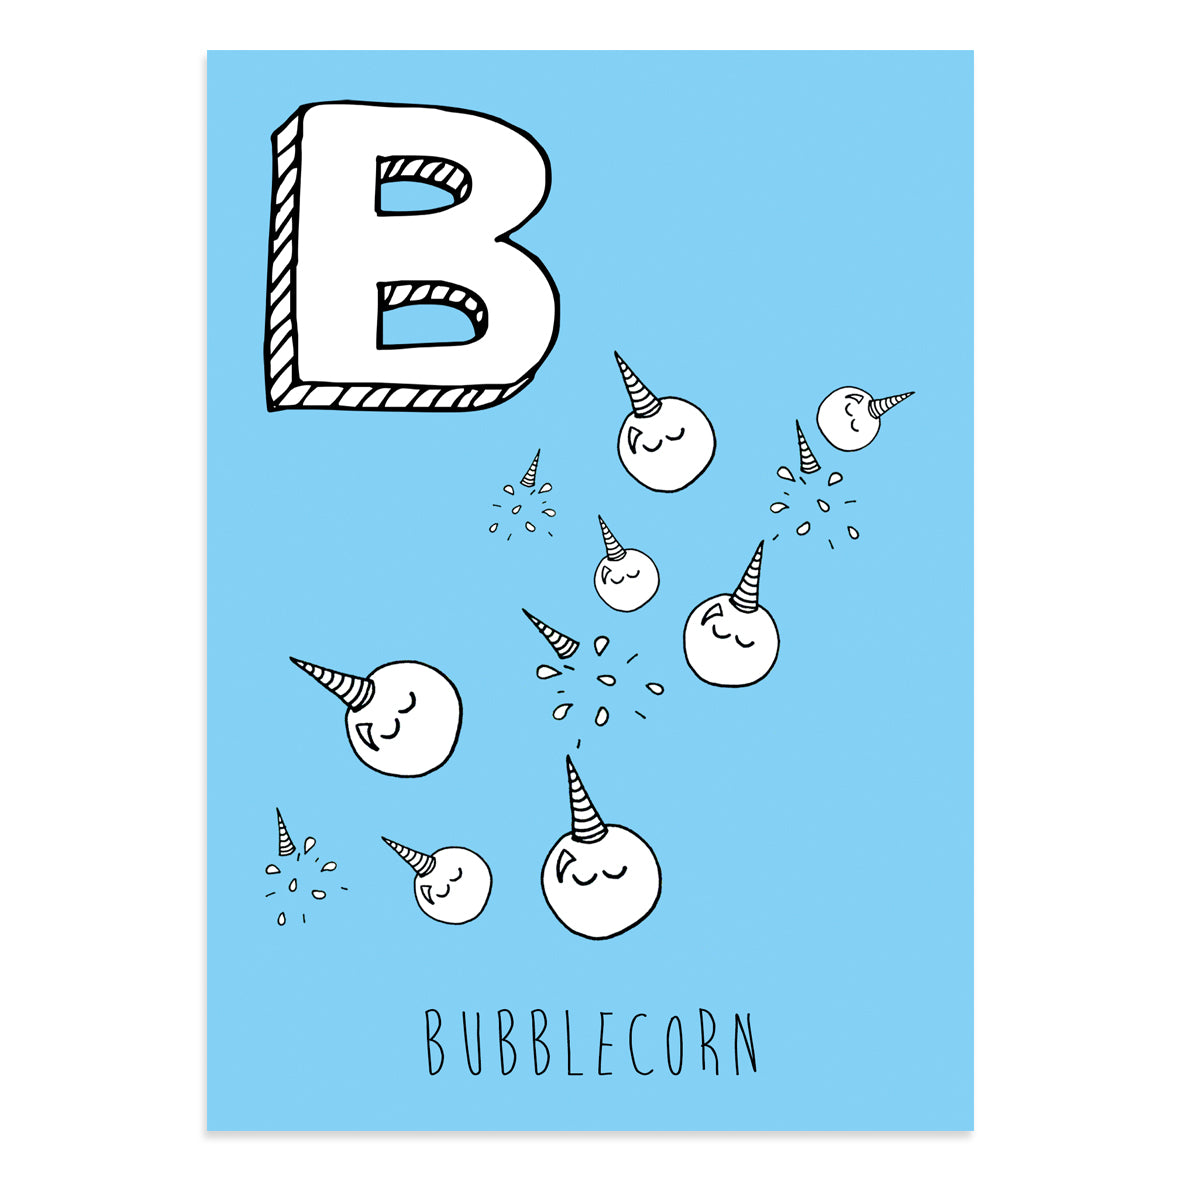 Unicorn postcard featuring B for bubblecorn